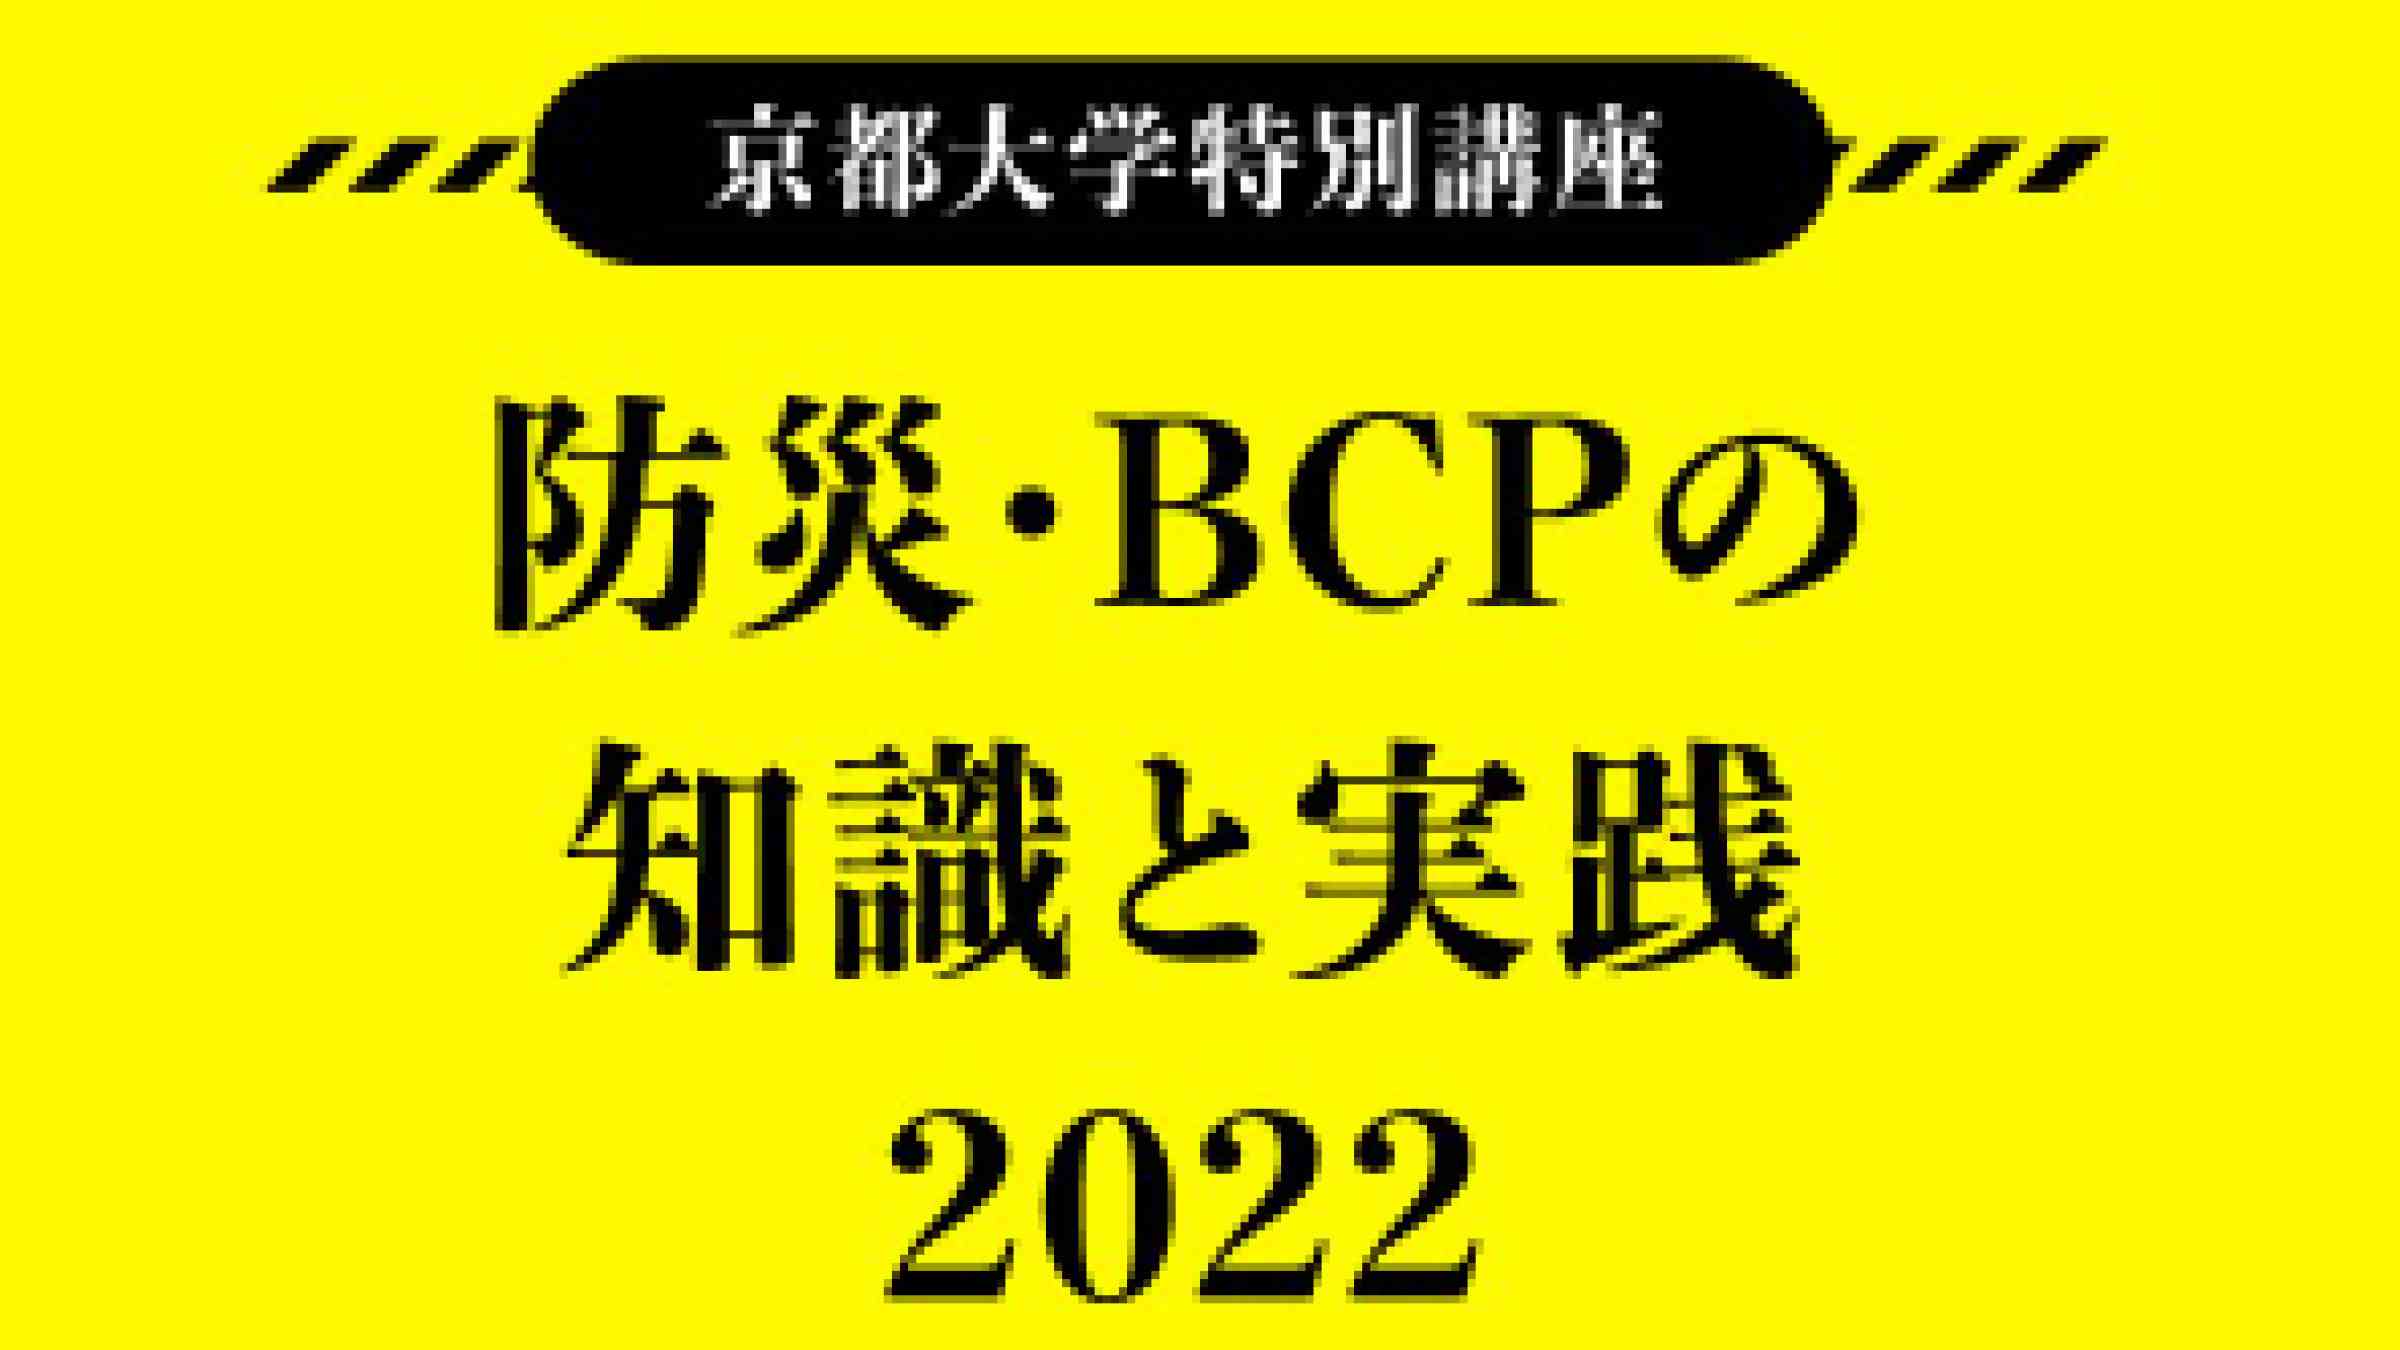 京都大学特別講座「防災・BCPの知識と実践2022」